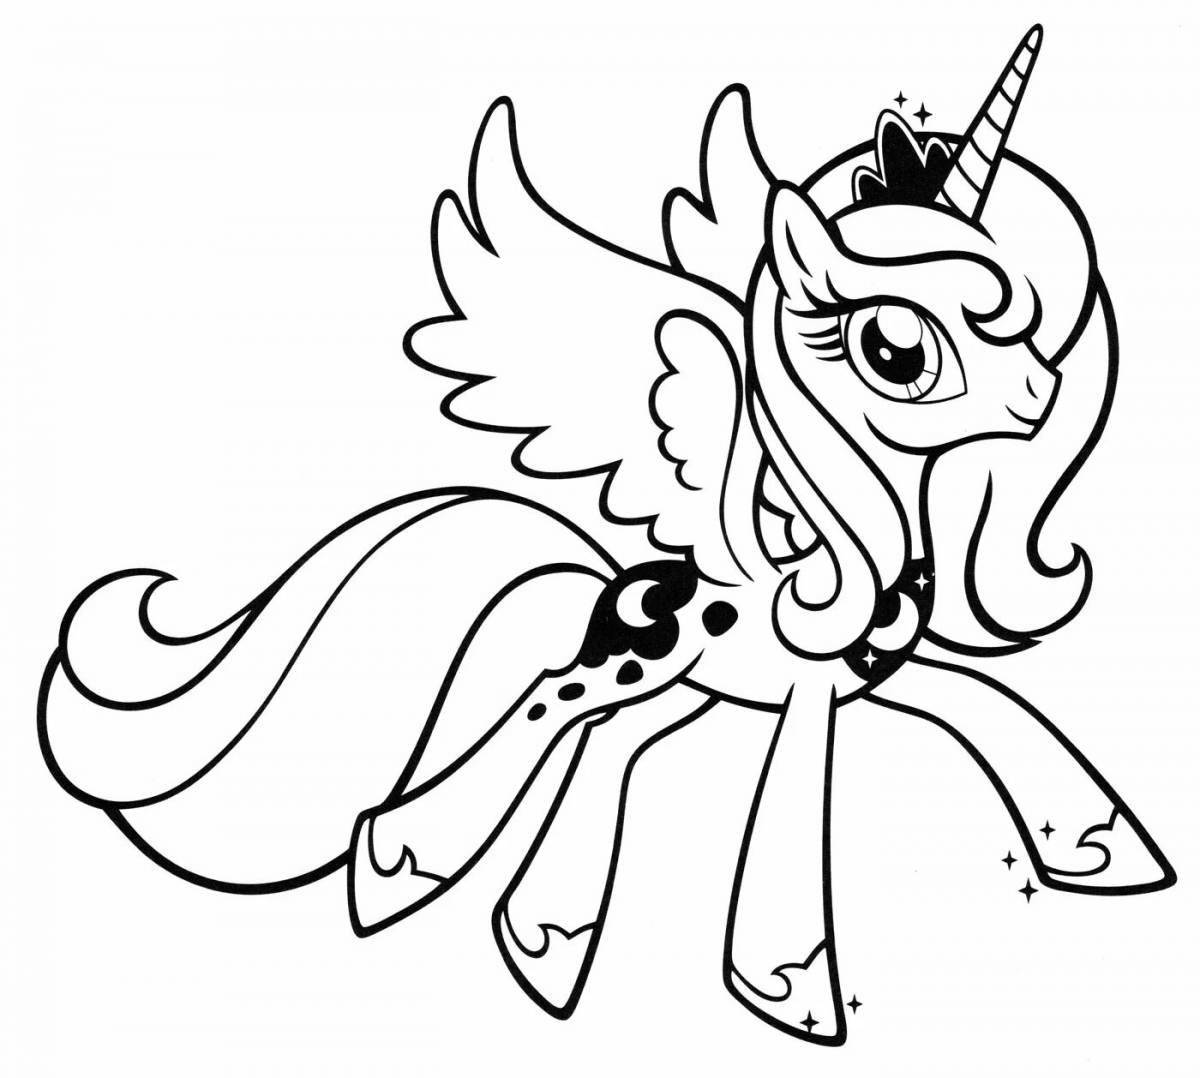 Princess cadence's shining pony coloring book